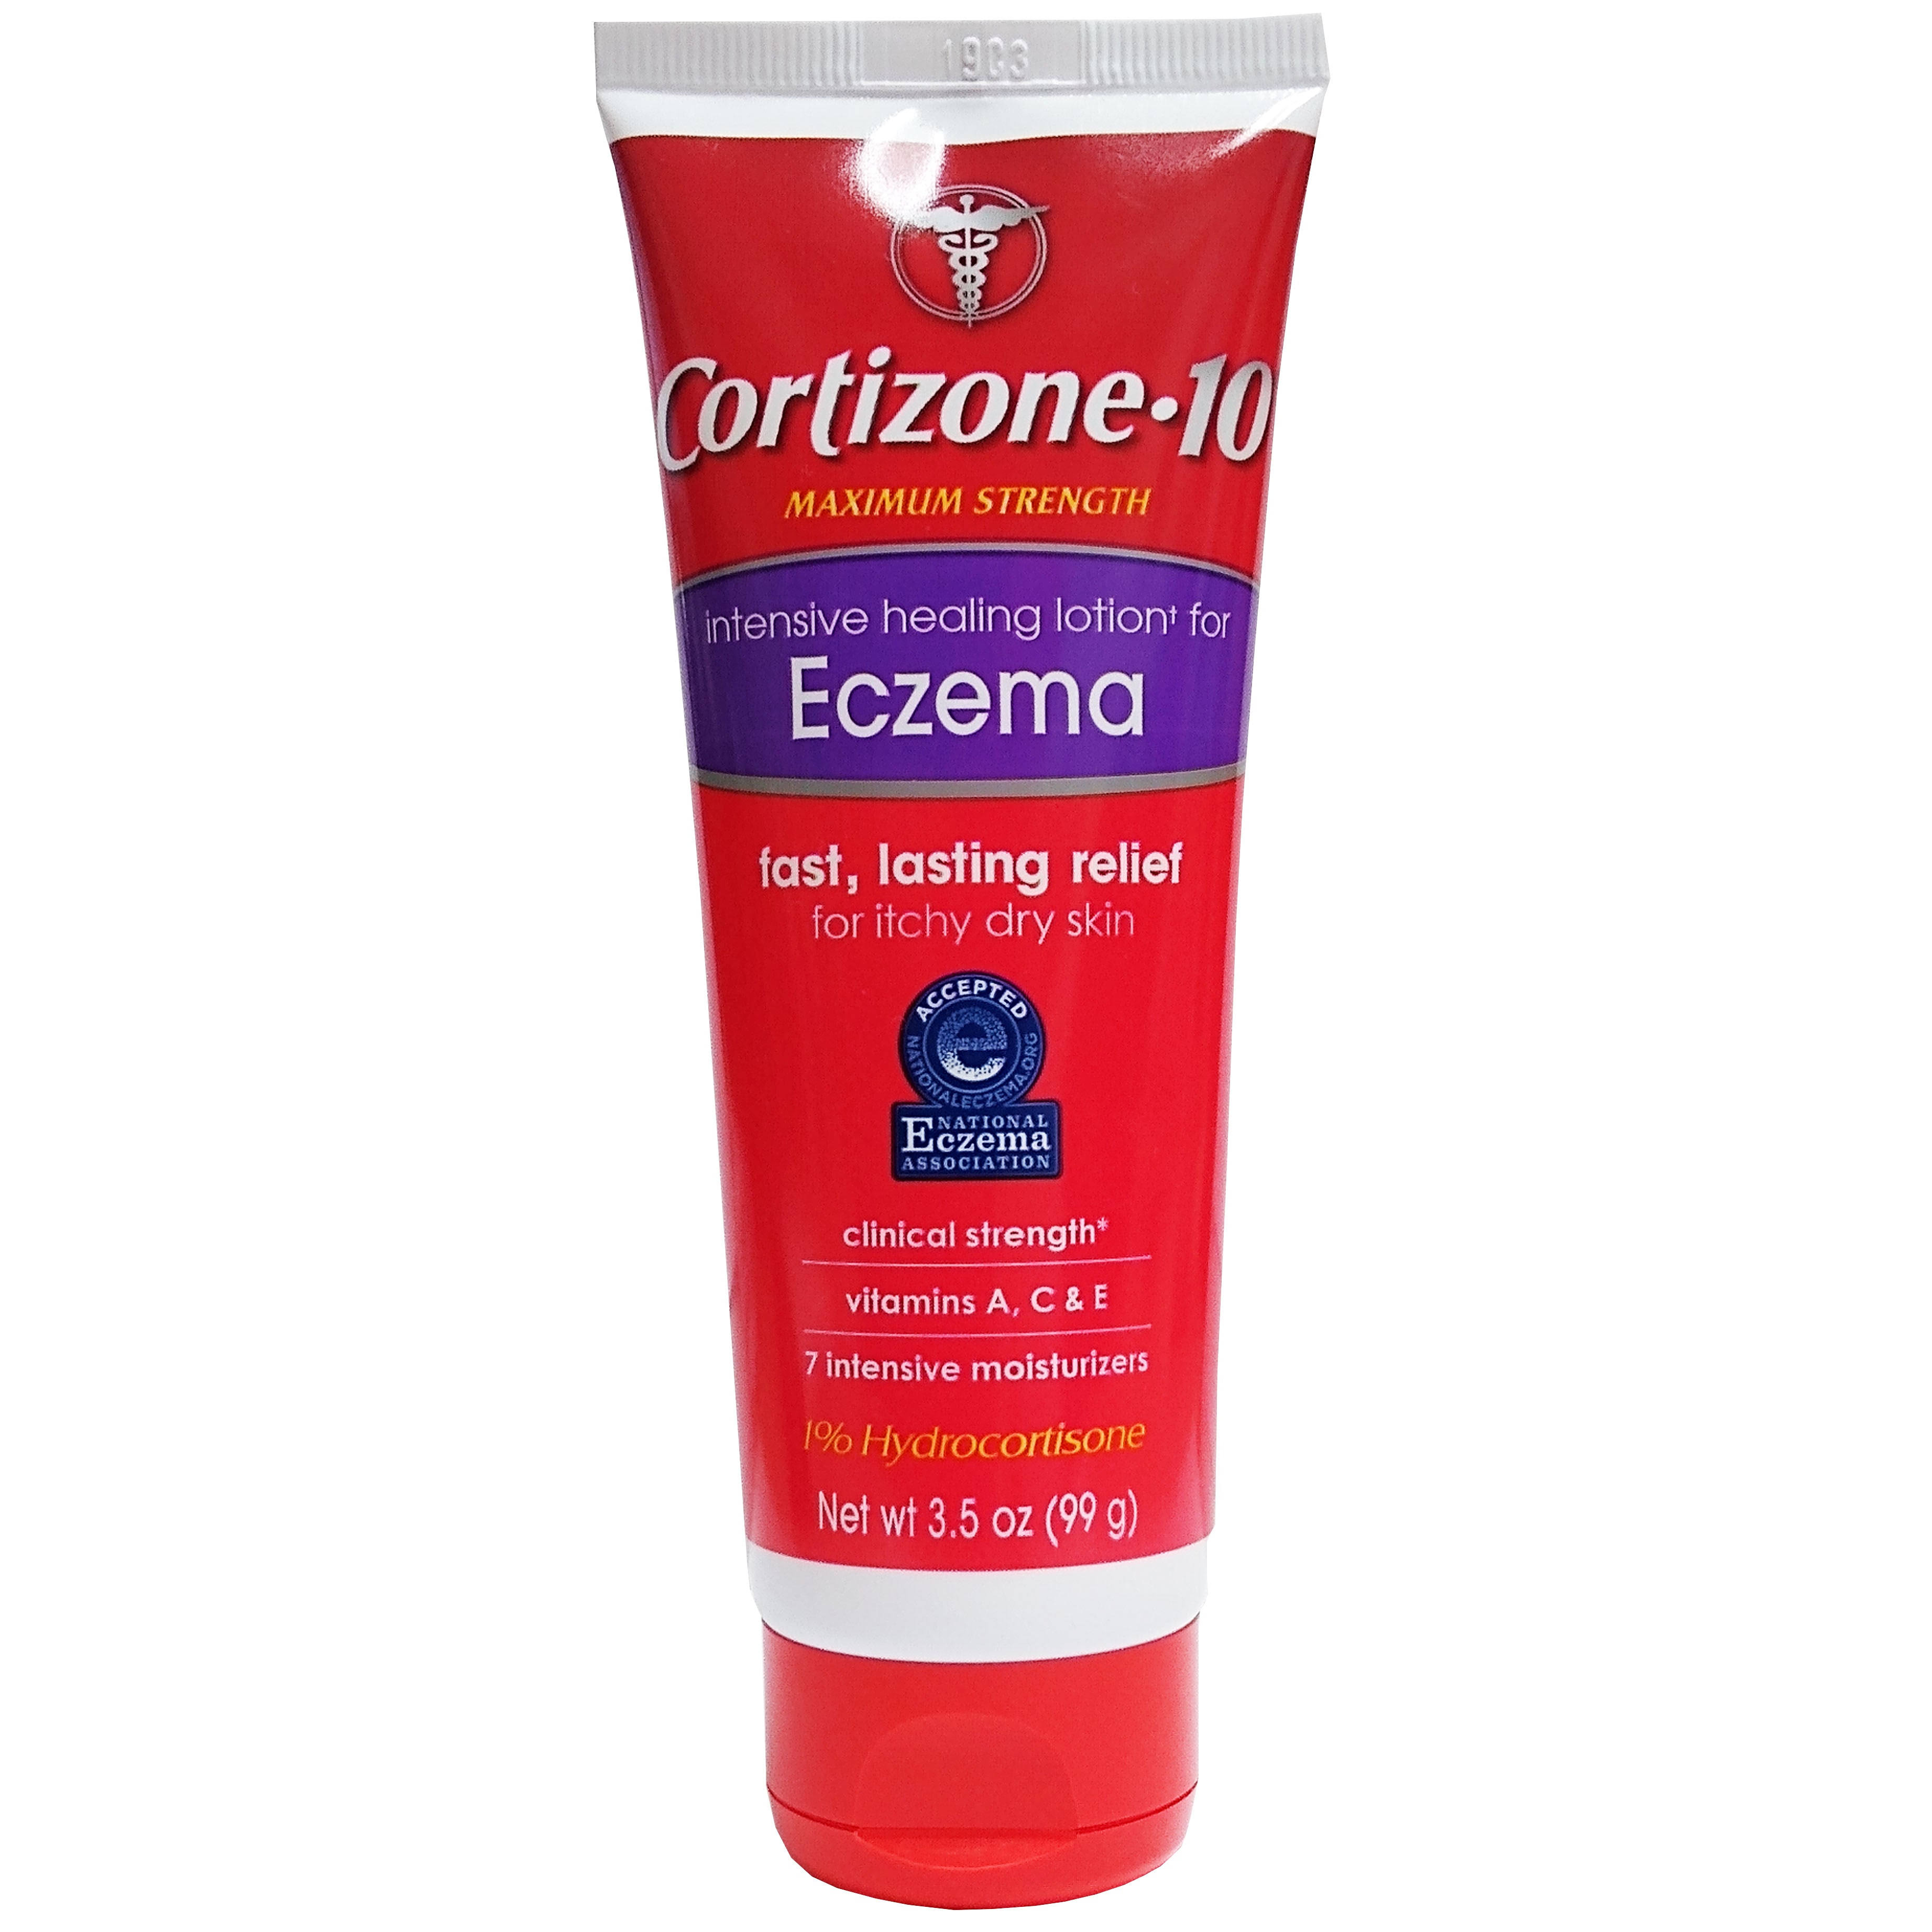 Cortizone-10 Maximum Strength Intensive Healing Lotion for Eczema - 3.5oz